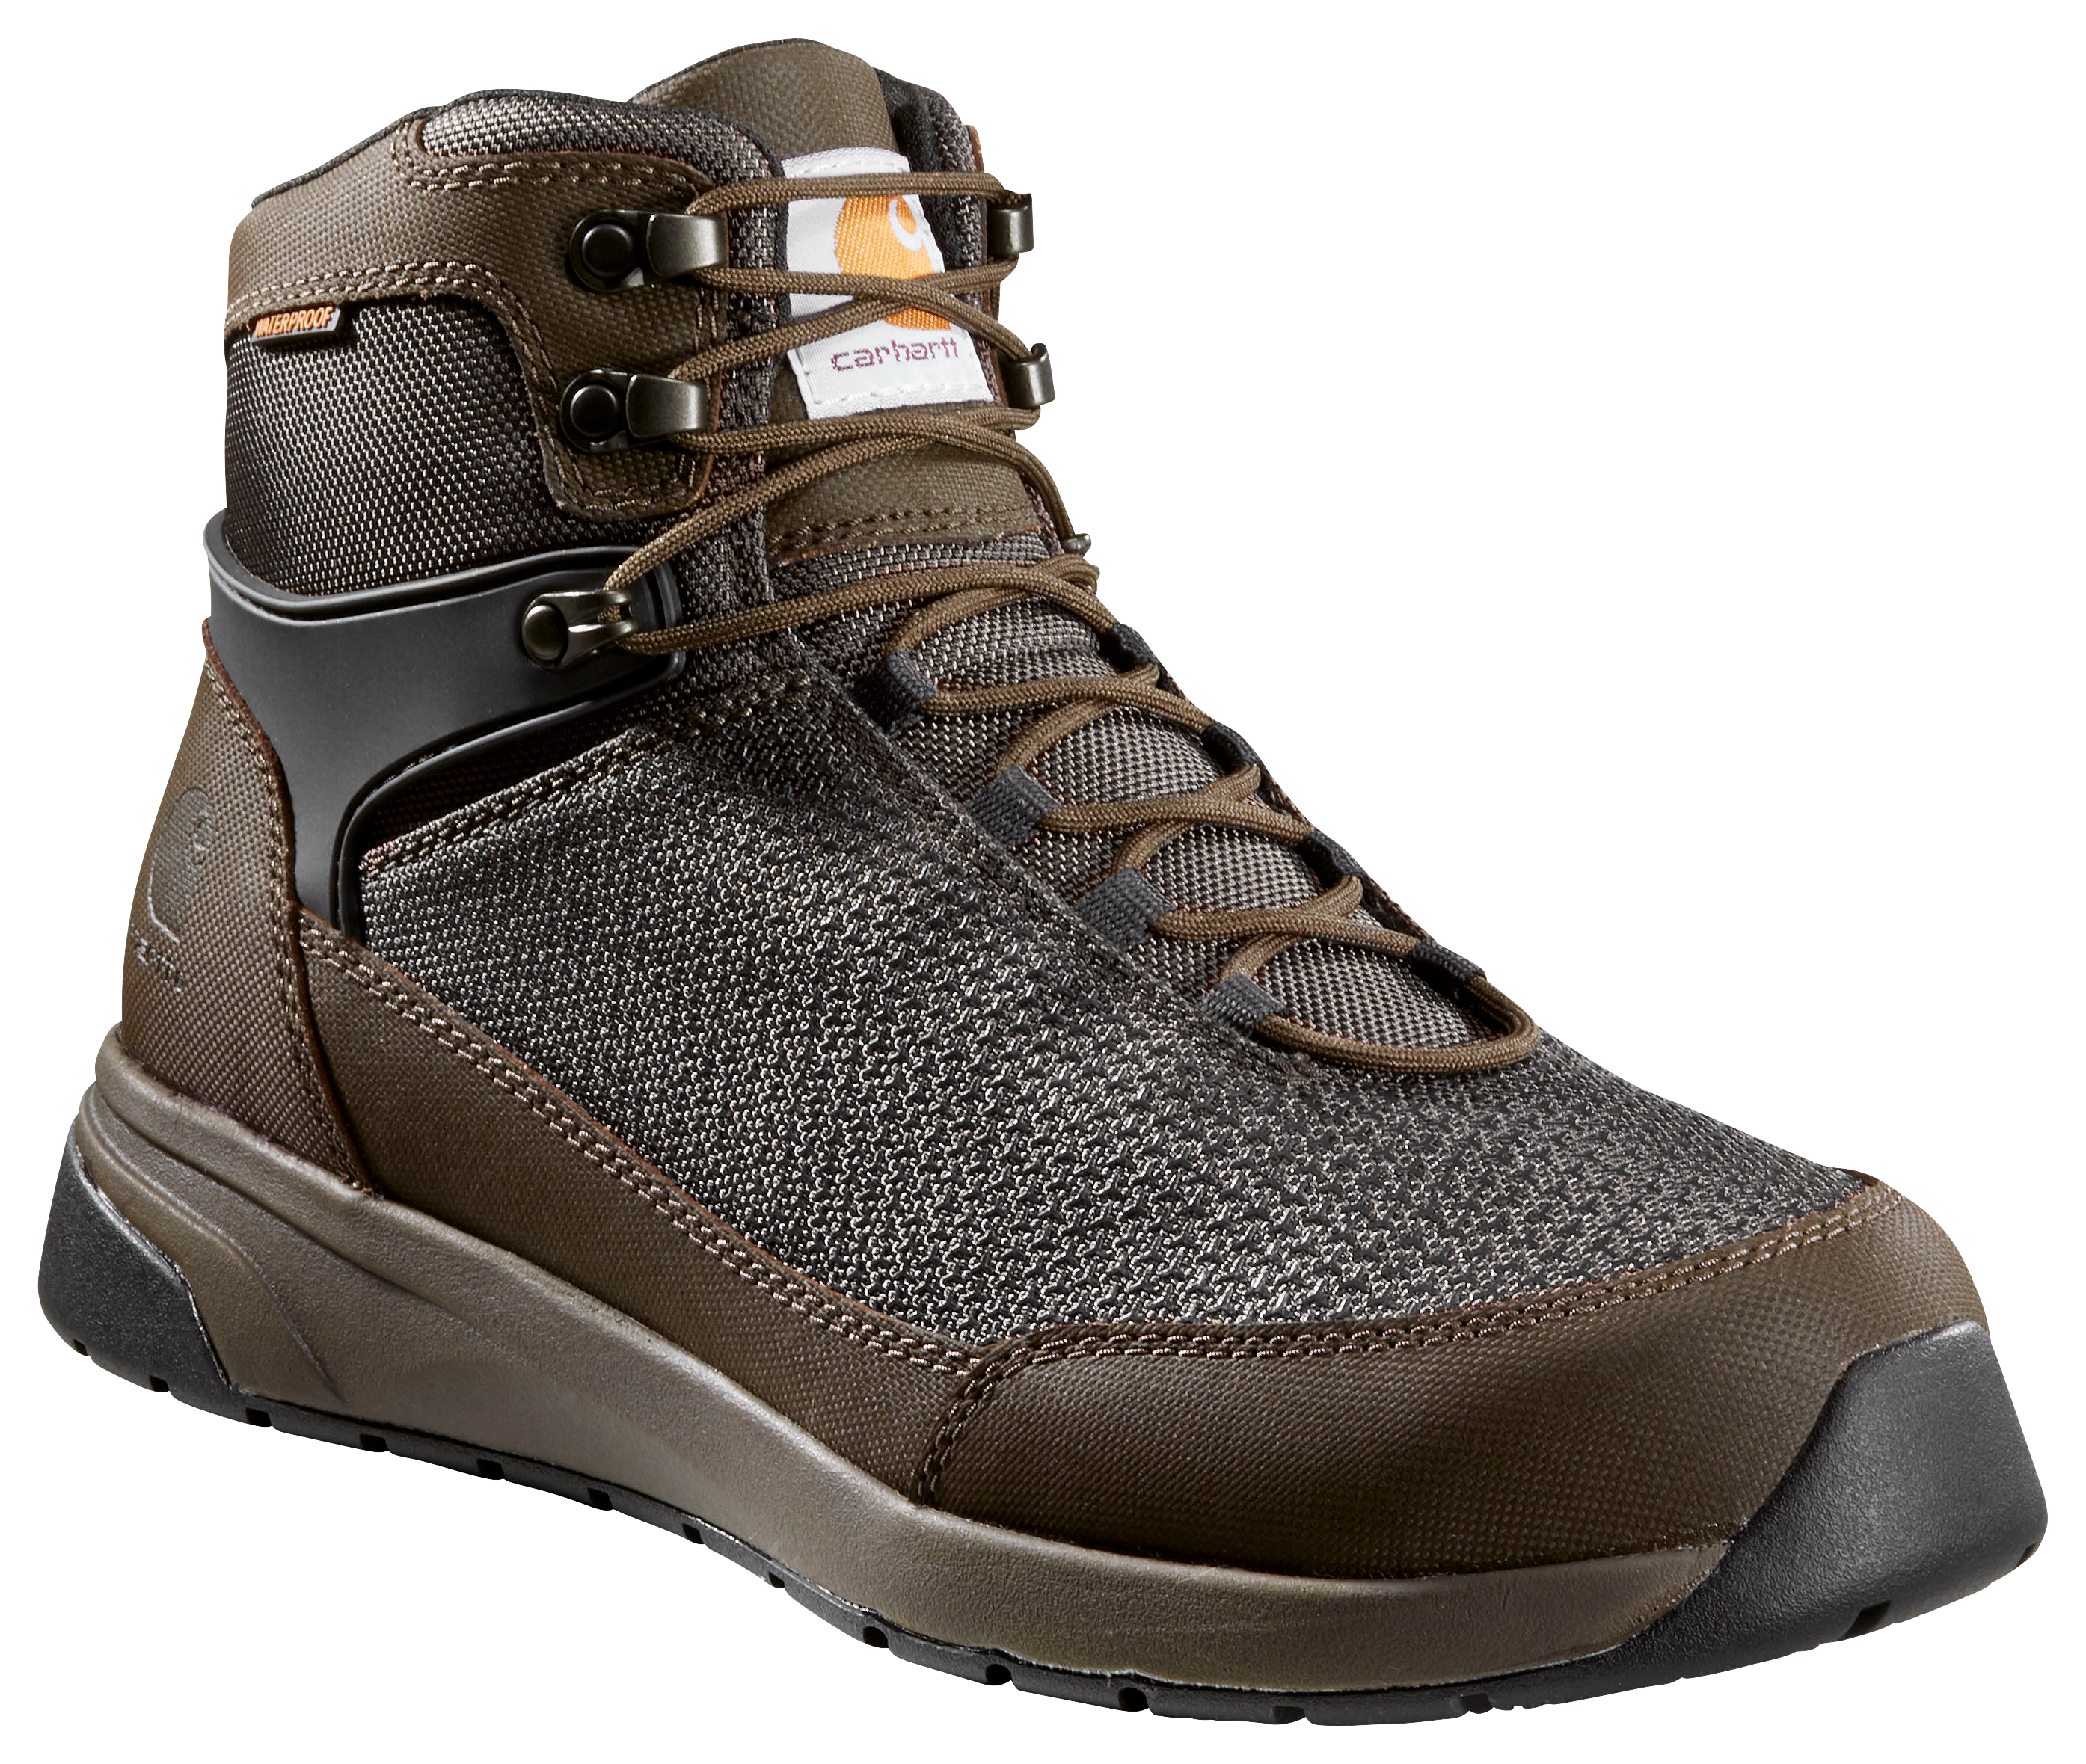 Carhartt Force 6"" Nano Composite-Toe Work Boots for Men - Espresso - 8.5W